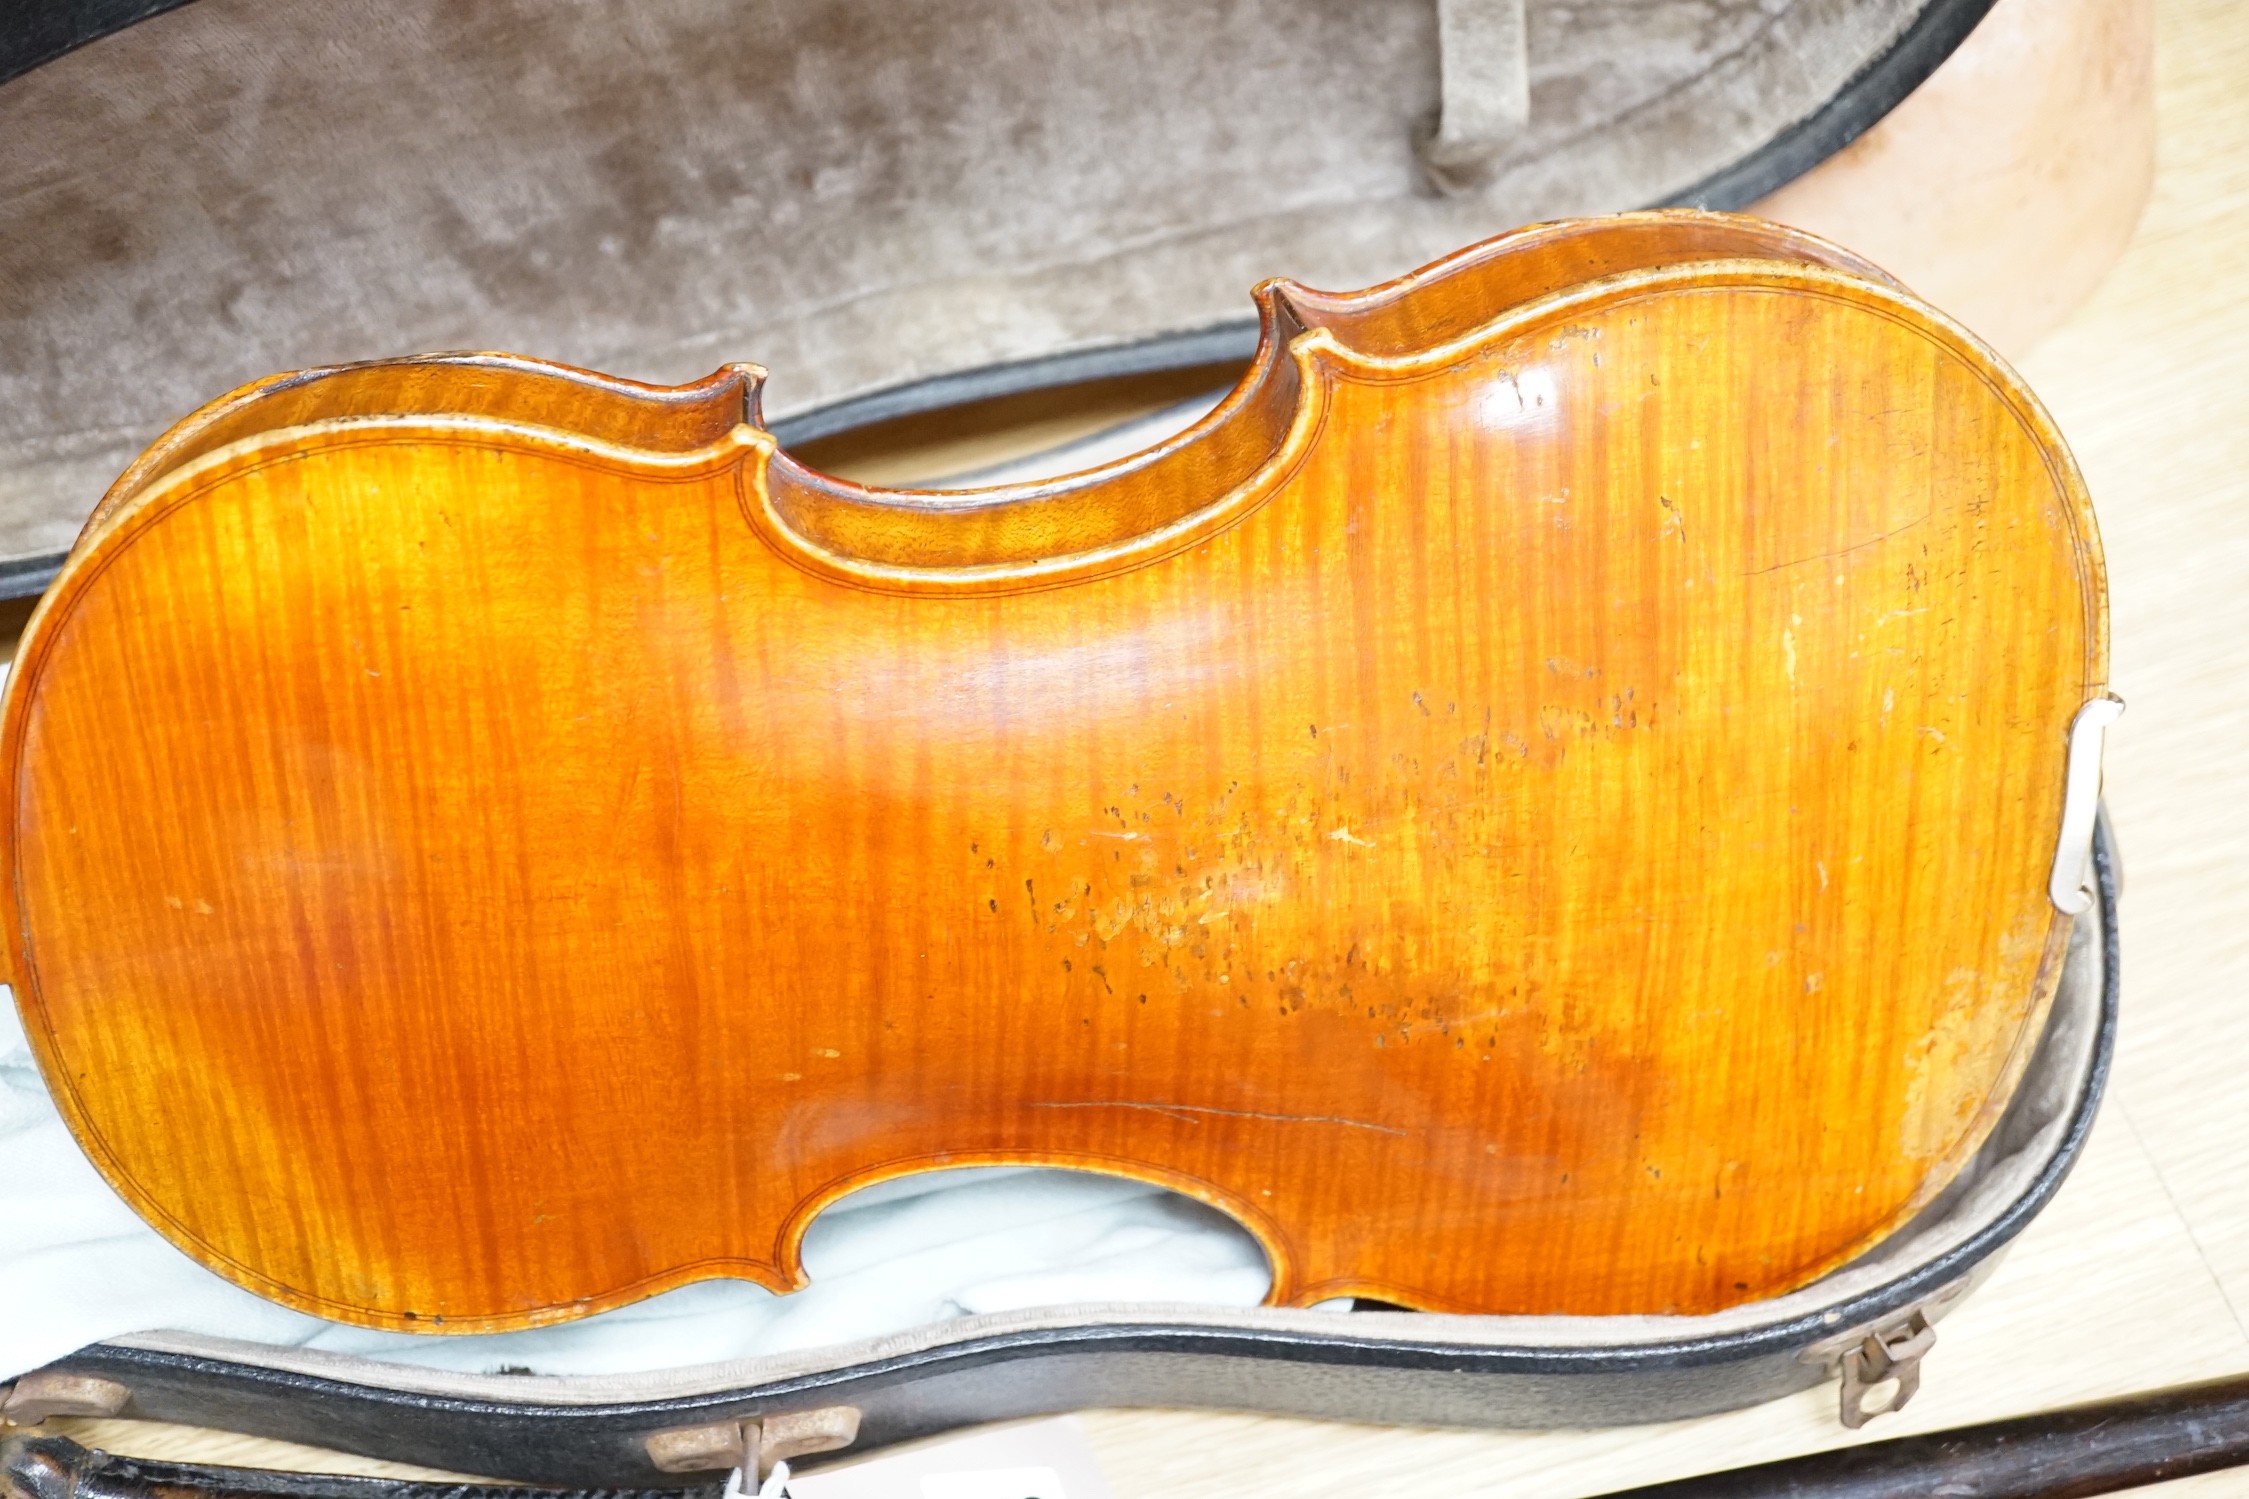 A 19th century French Grandjon school violin, labelled Joseph Guarnerins fecit Cremonae anno 1719 IHS, length of back 35.5 cm (14in.), cased